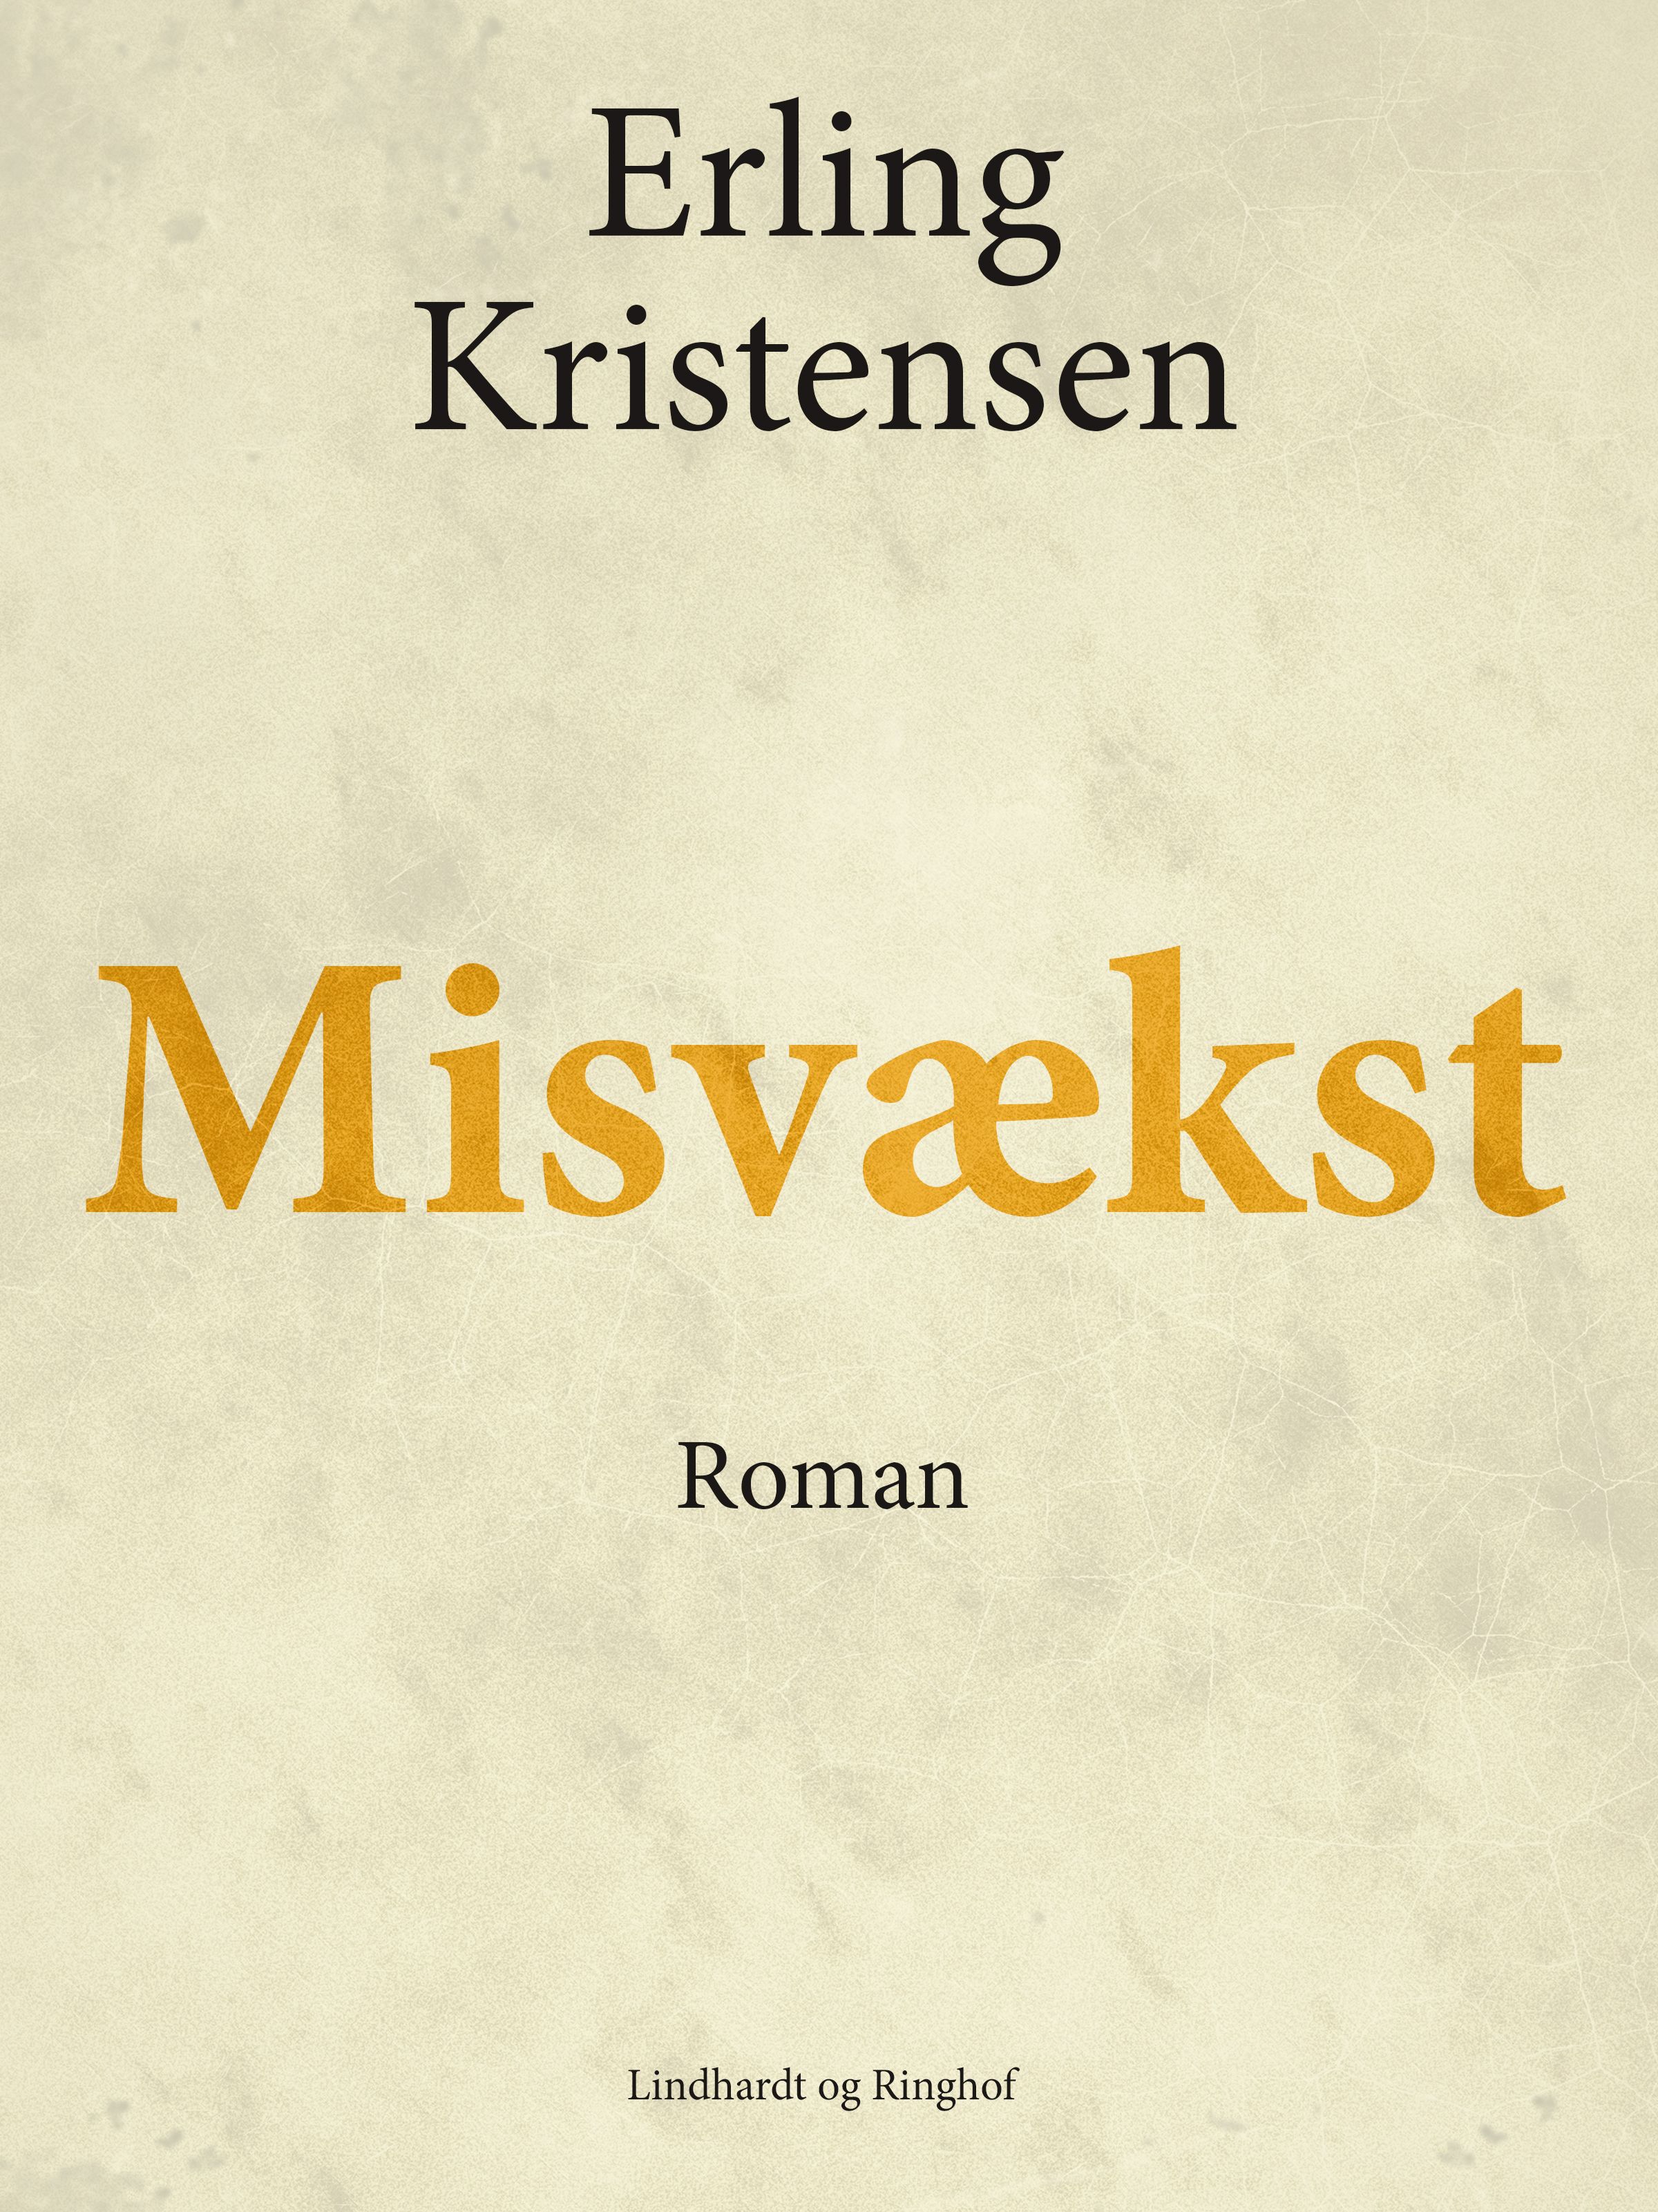 Misvækst, eBook by Erling Kristensen